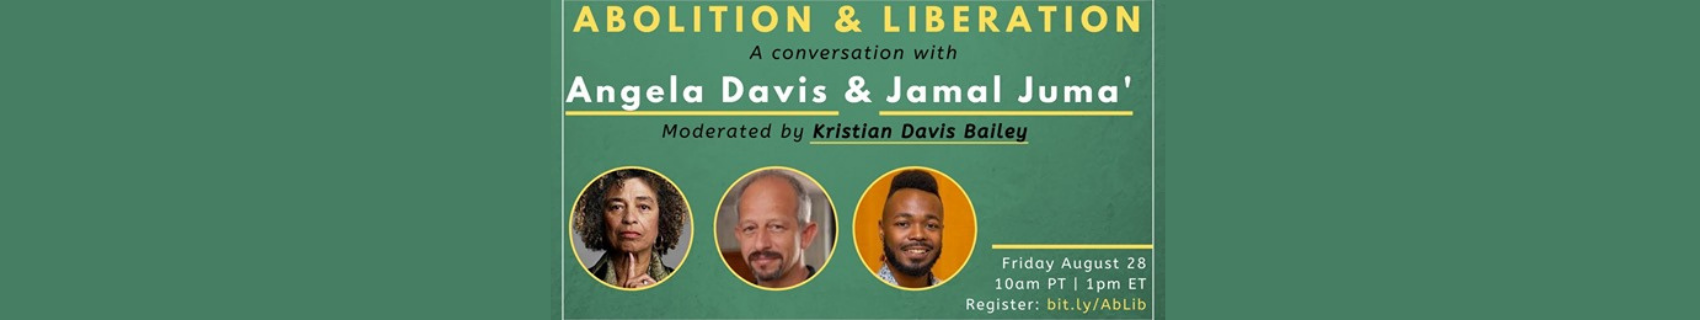 Abolition & Liberation – Angela Davis and Jamal Juma